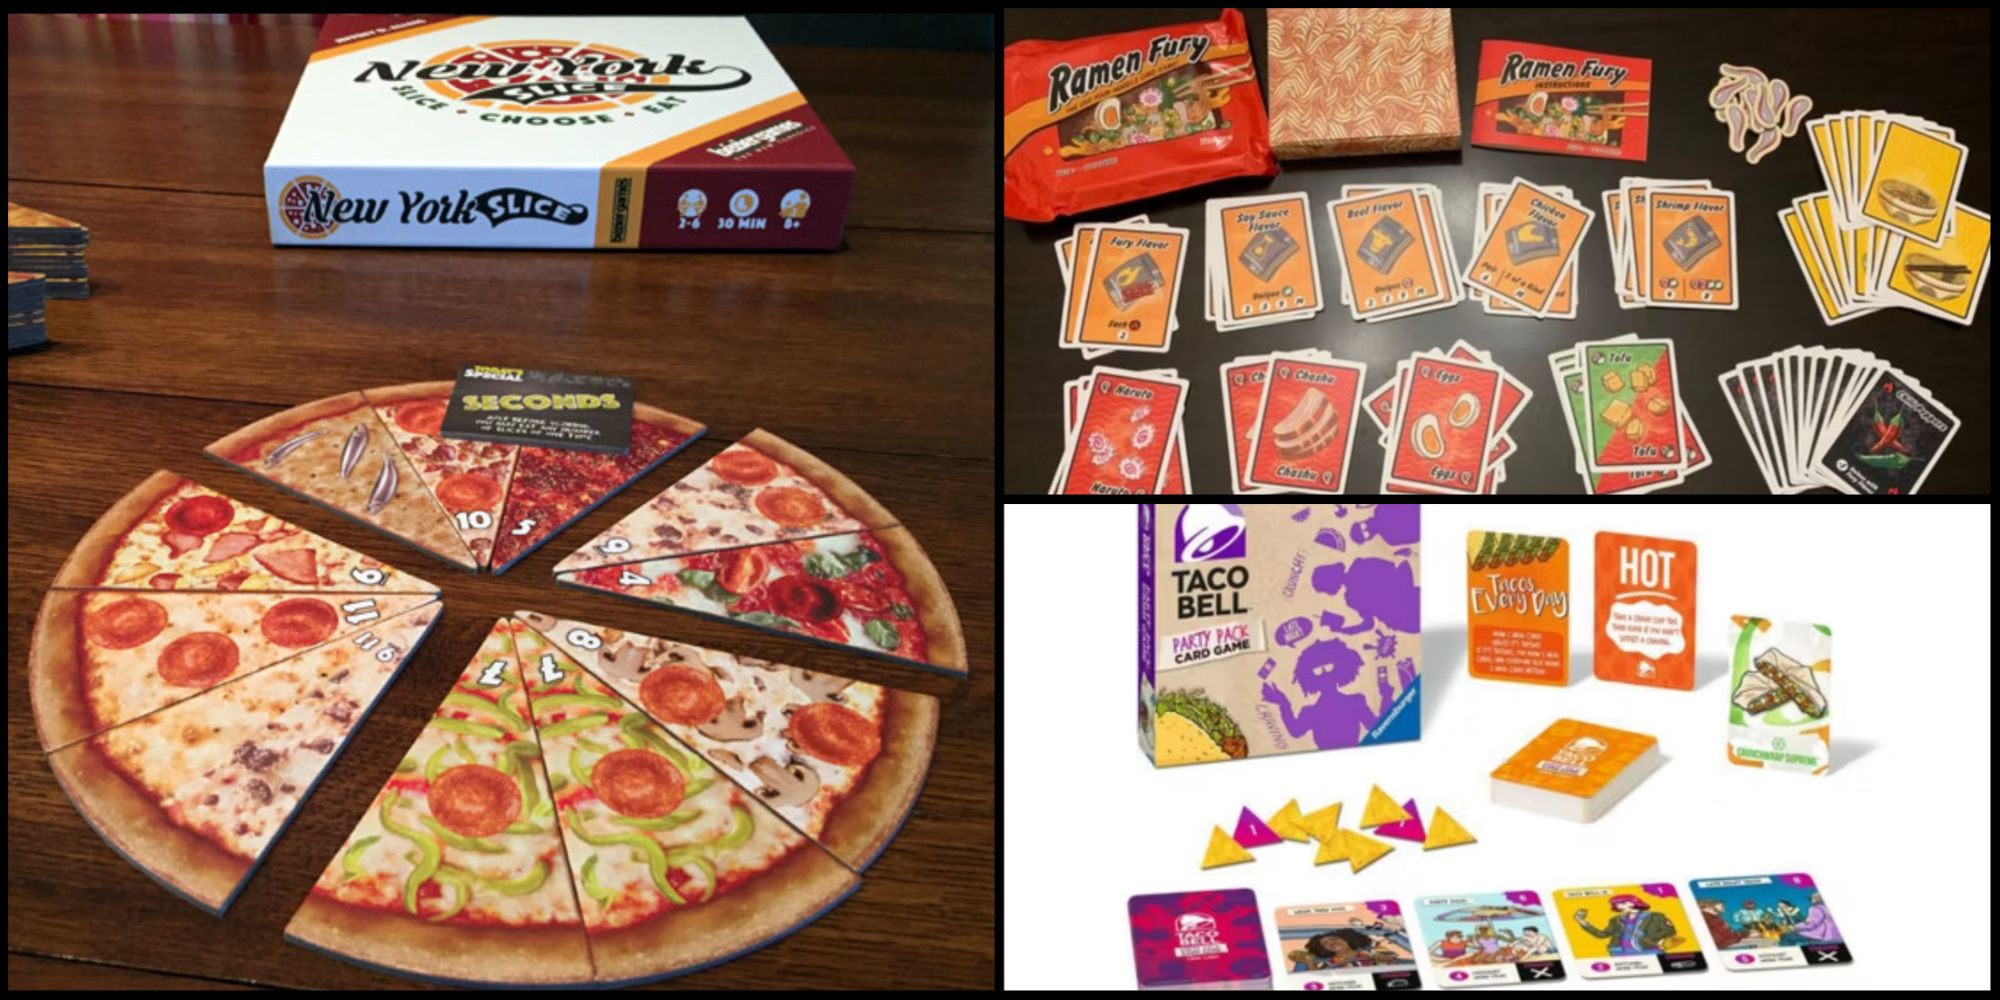 Food Dobble  Food, Simple patterns, Board games